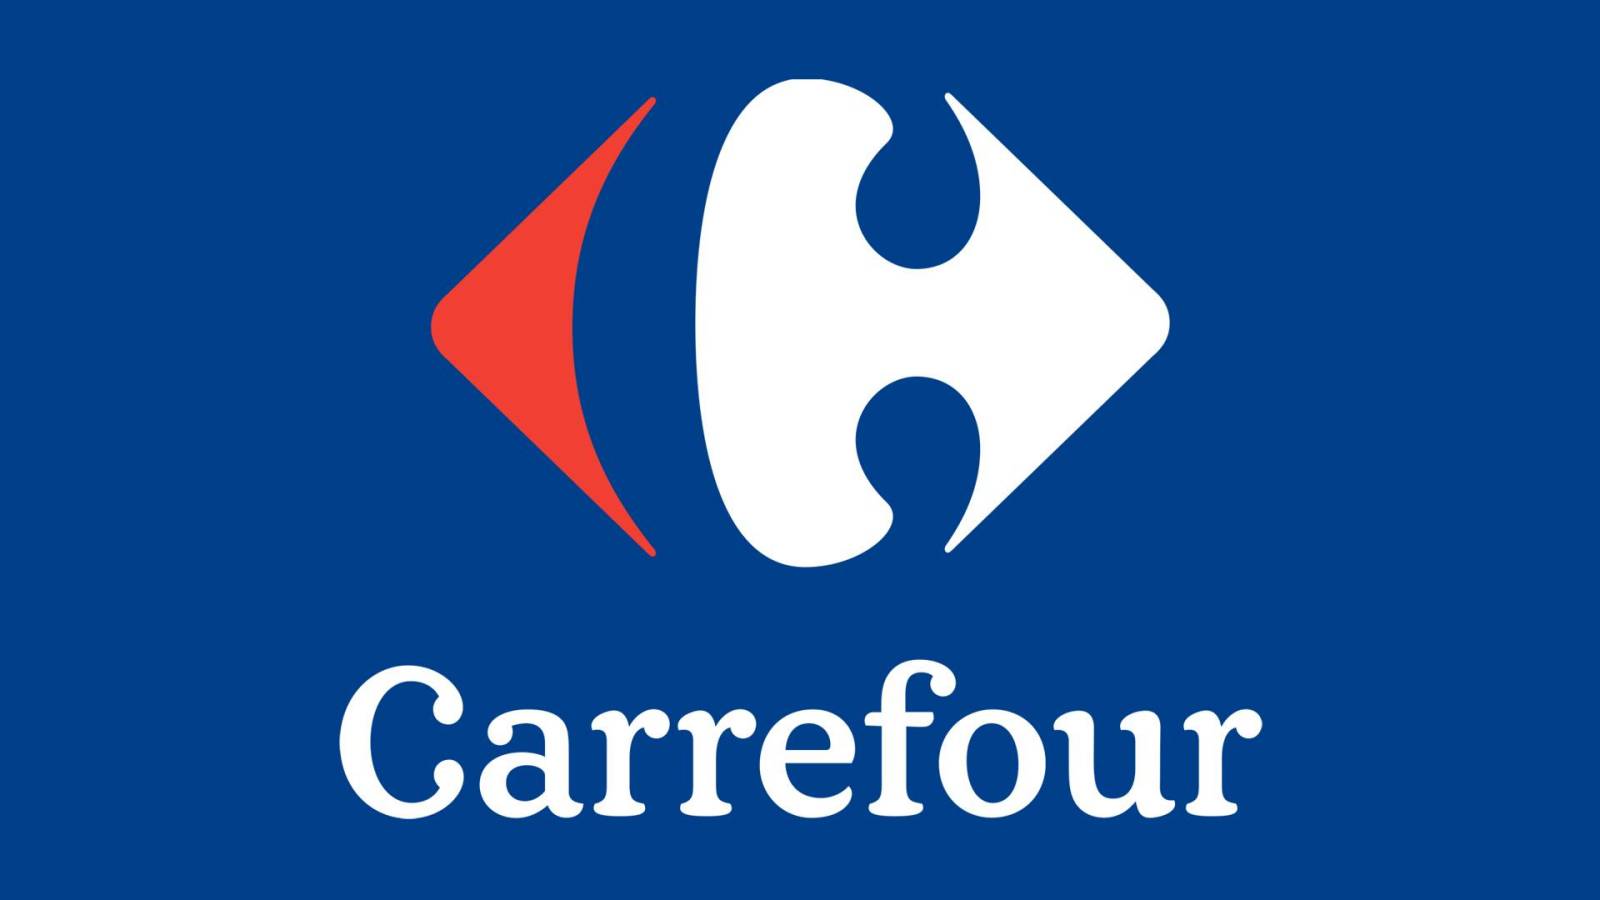 Carrefour sustancial